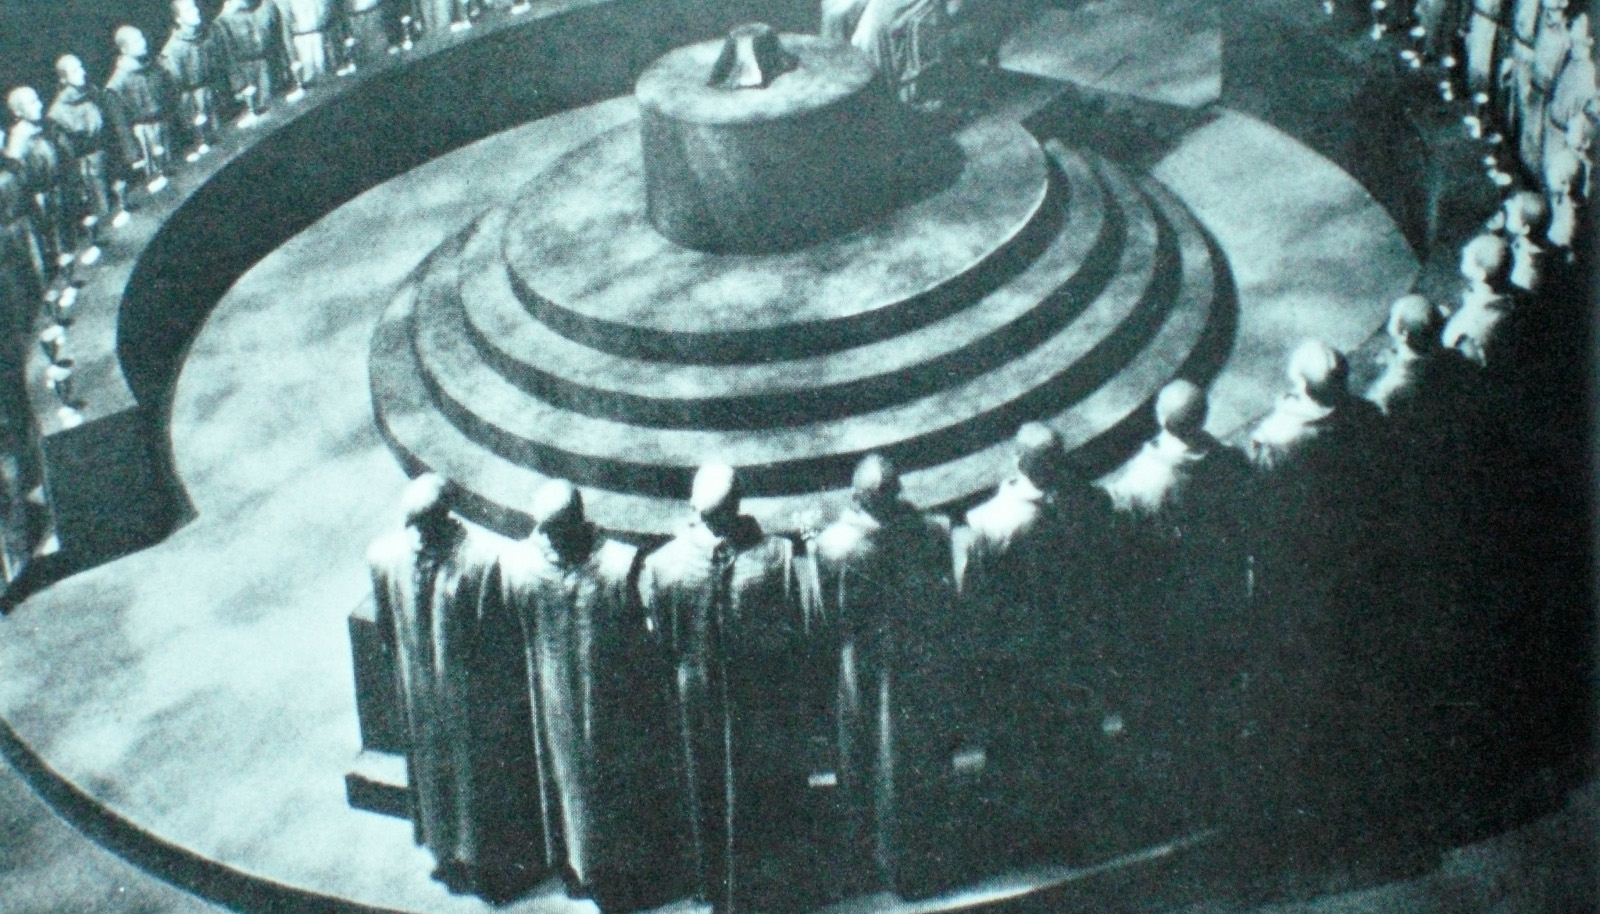 A gathering at an Illuminati ceremony